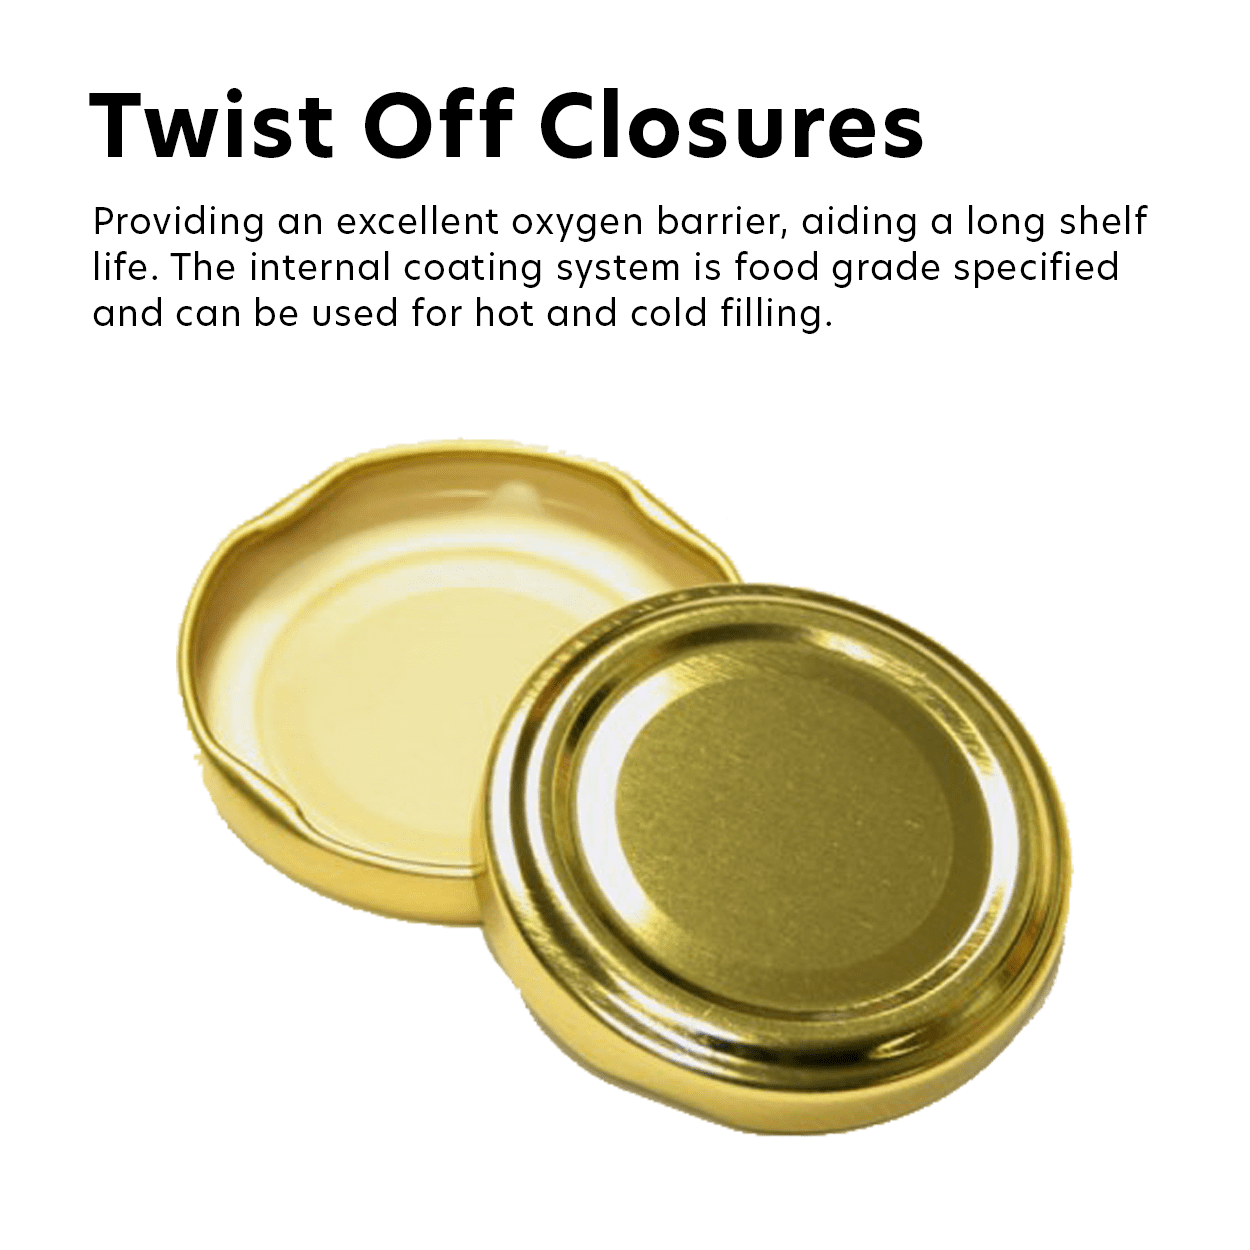 Twist Off Closures